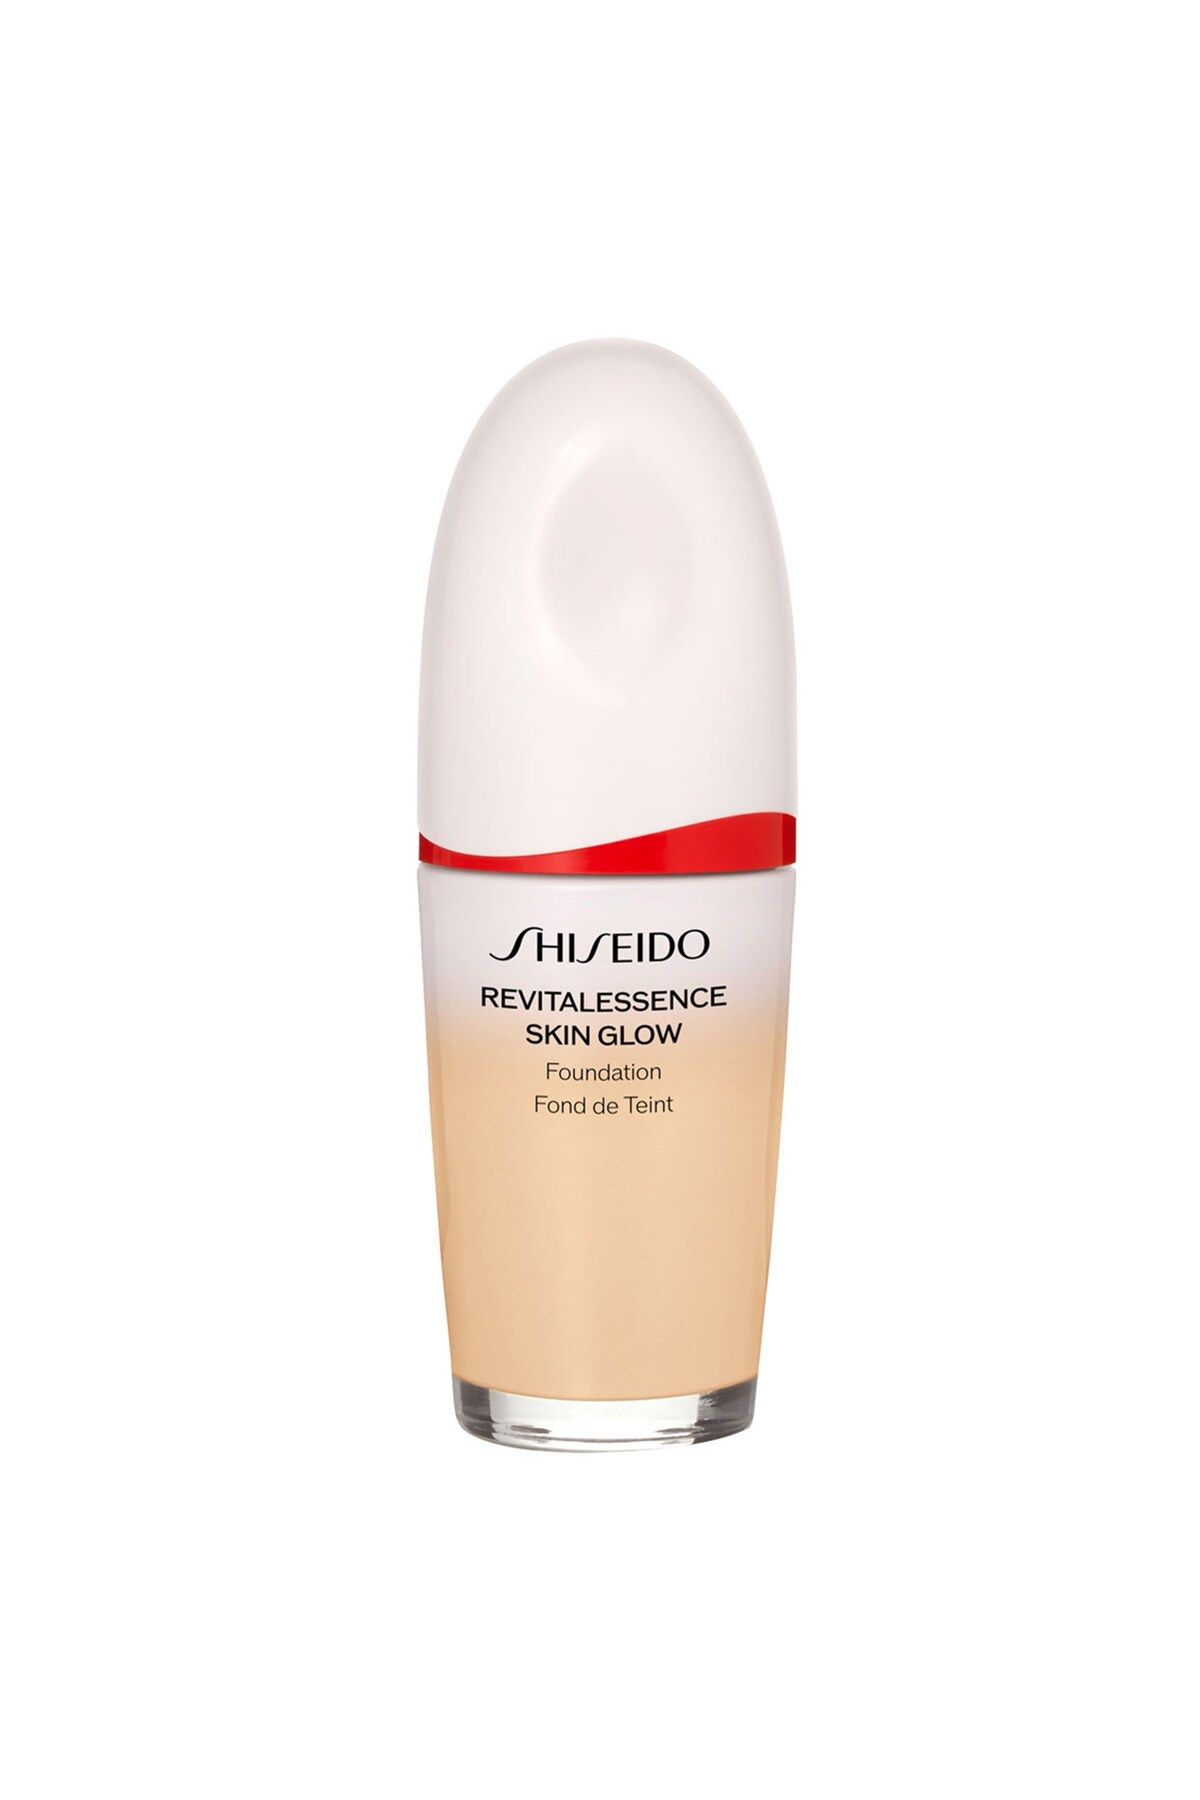 Shiseido REVITALESSENCE SKIN GLOW FOUNDATION SPF 30 PA+++ - 30 ML